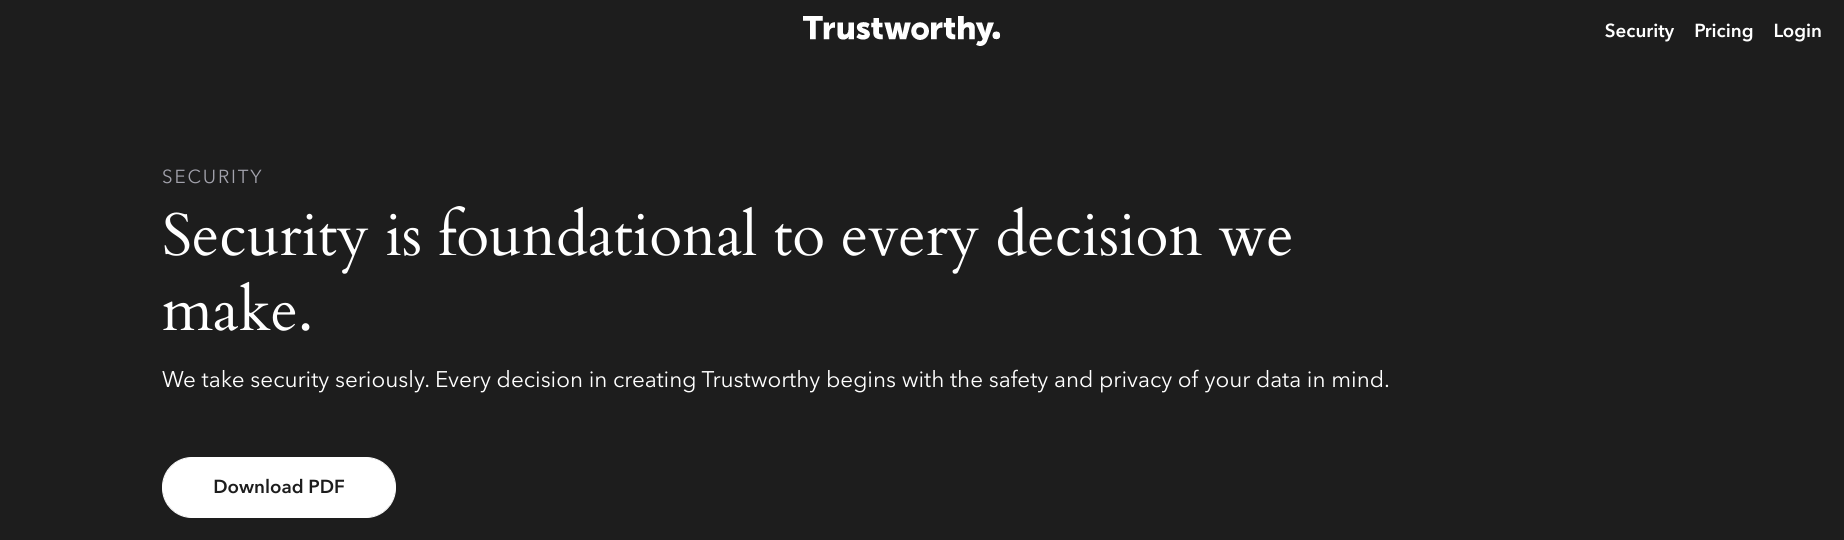 Trustworthy security